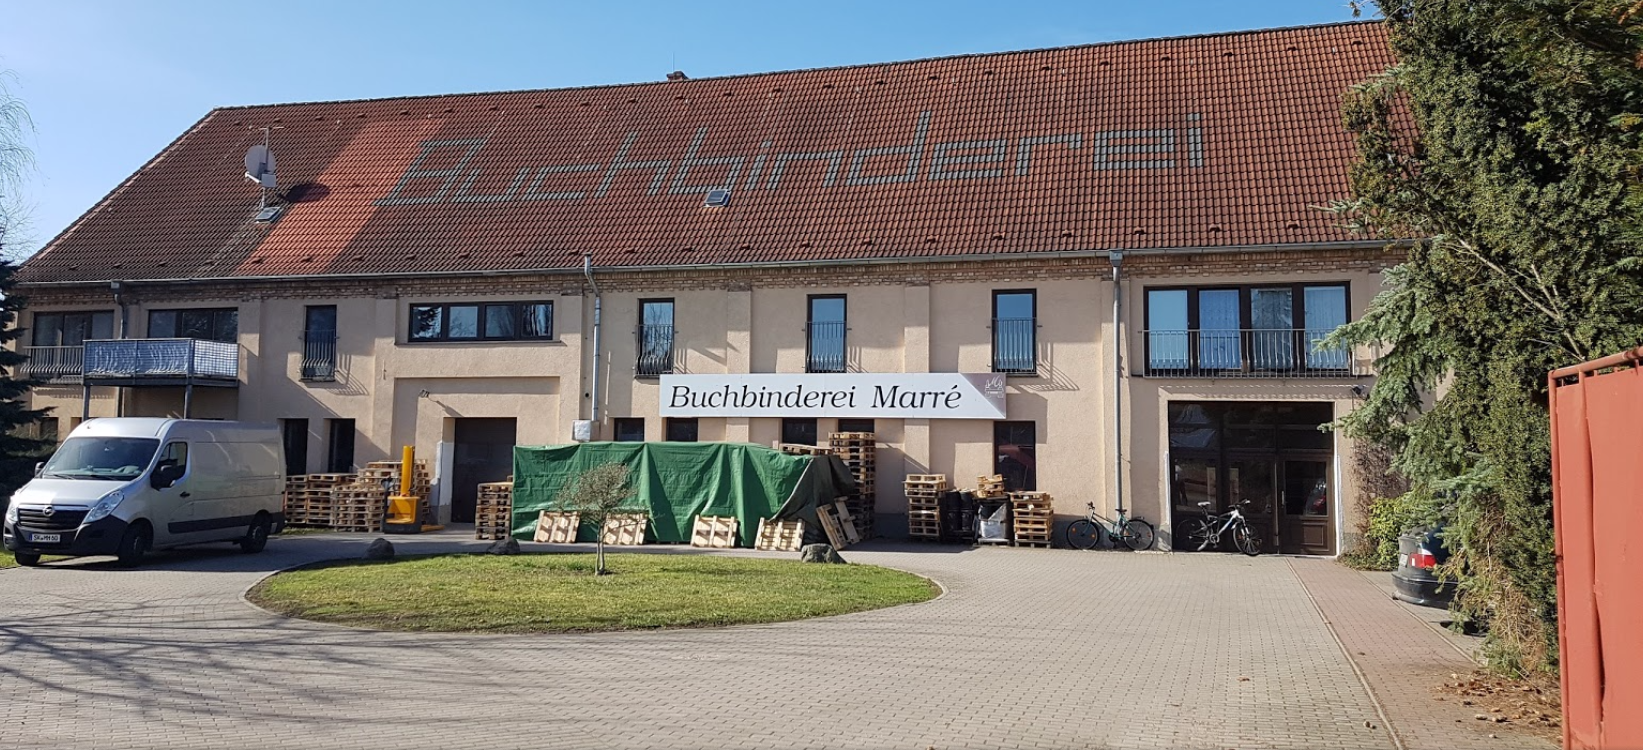 Buchbinderei Marré, Bahnhofstr. 7 in Teicha